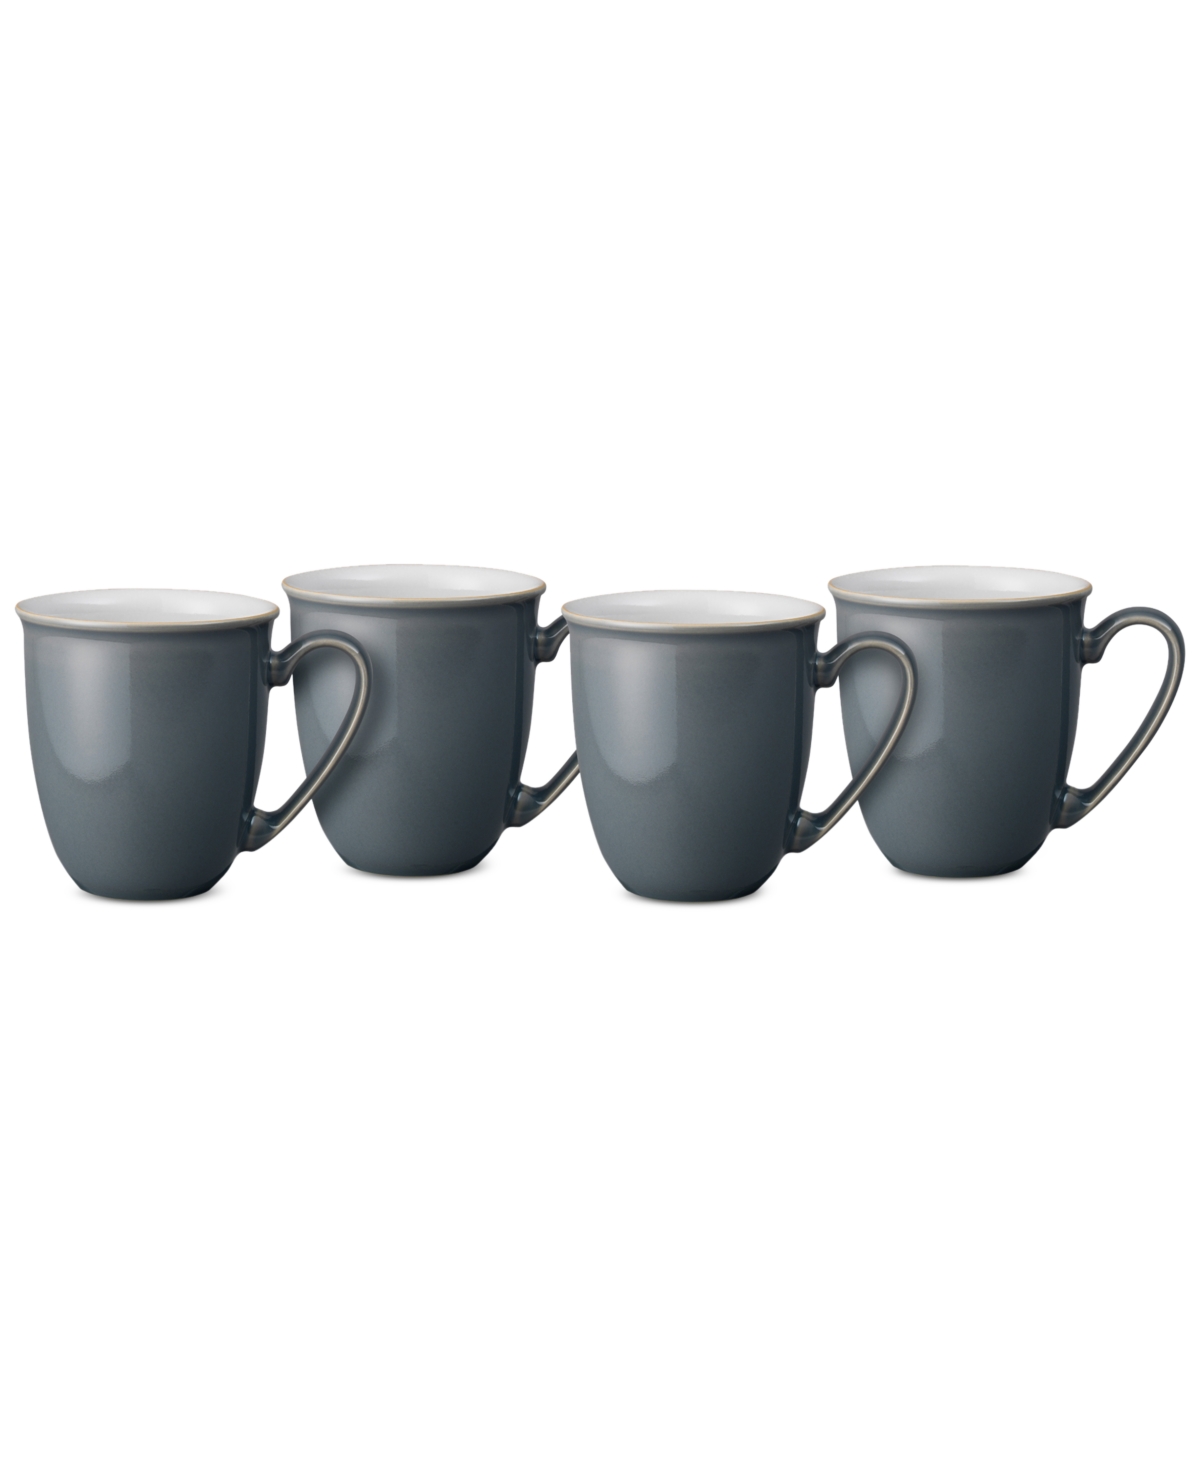 Elements Collection Stoneware Coffee Mugs, Set of 4 - Dark Grey